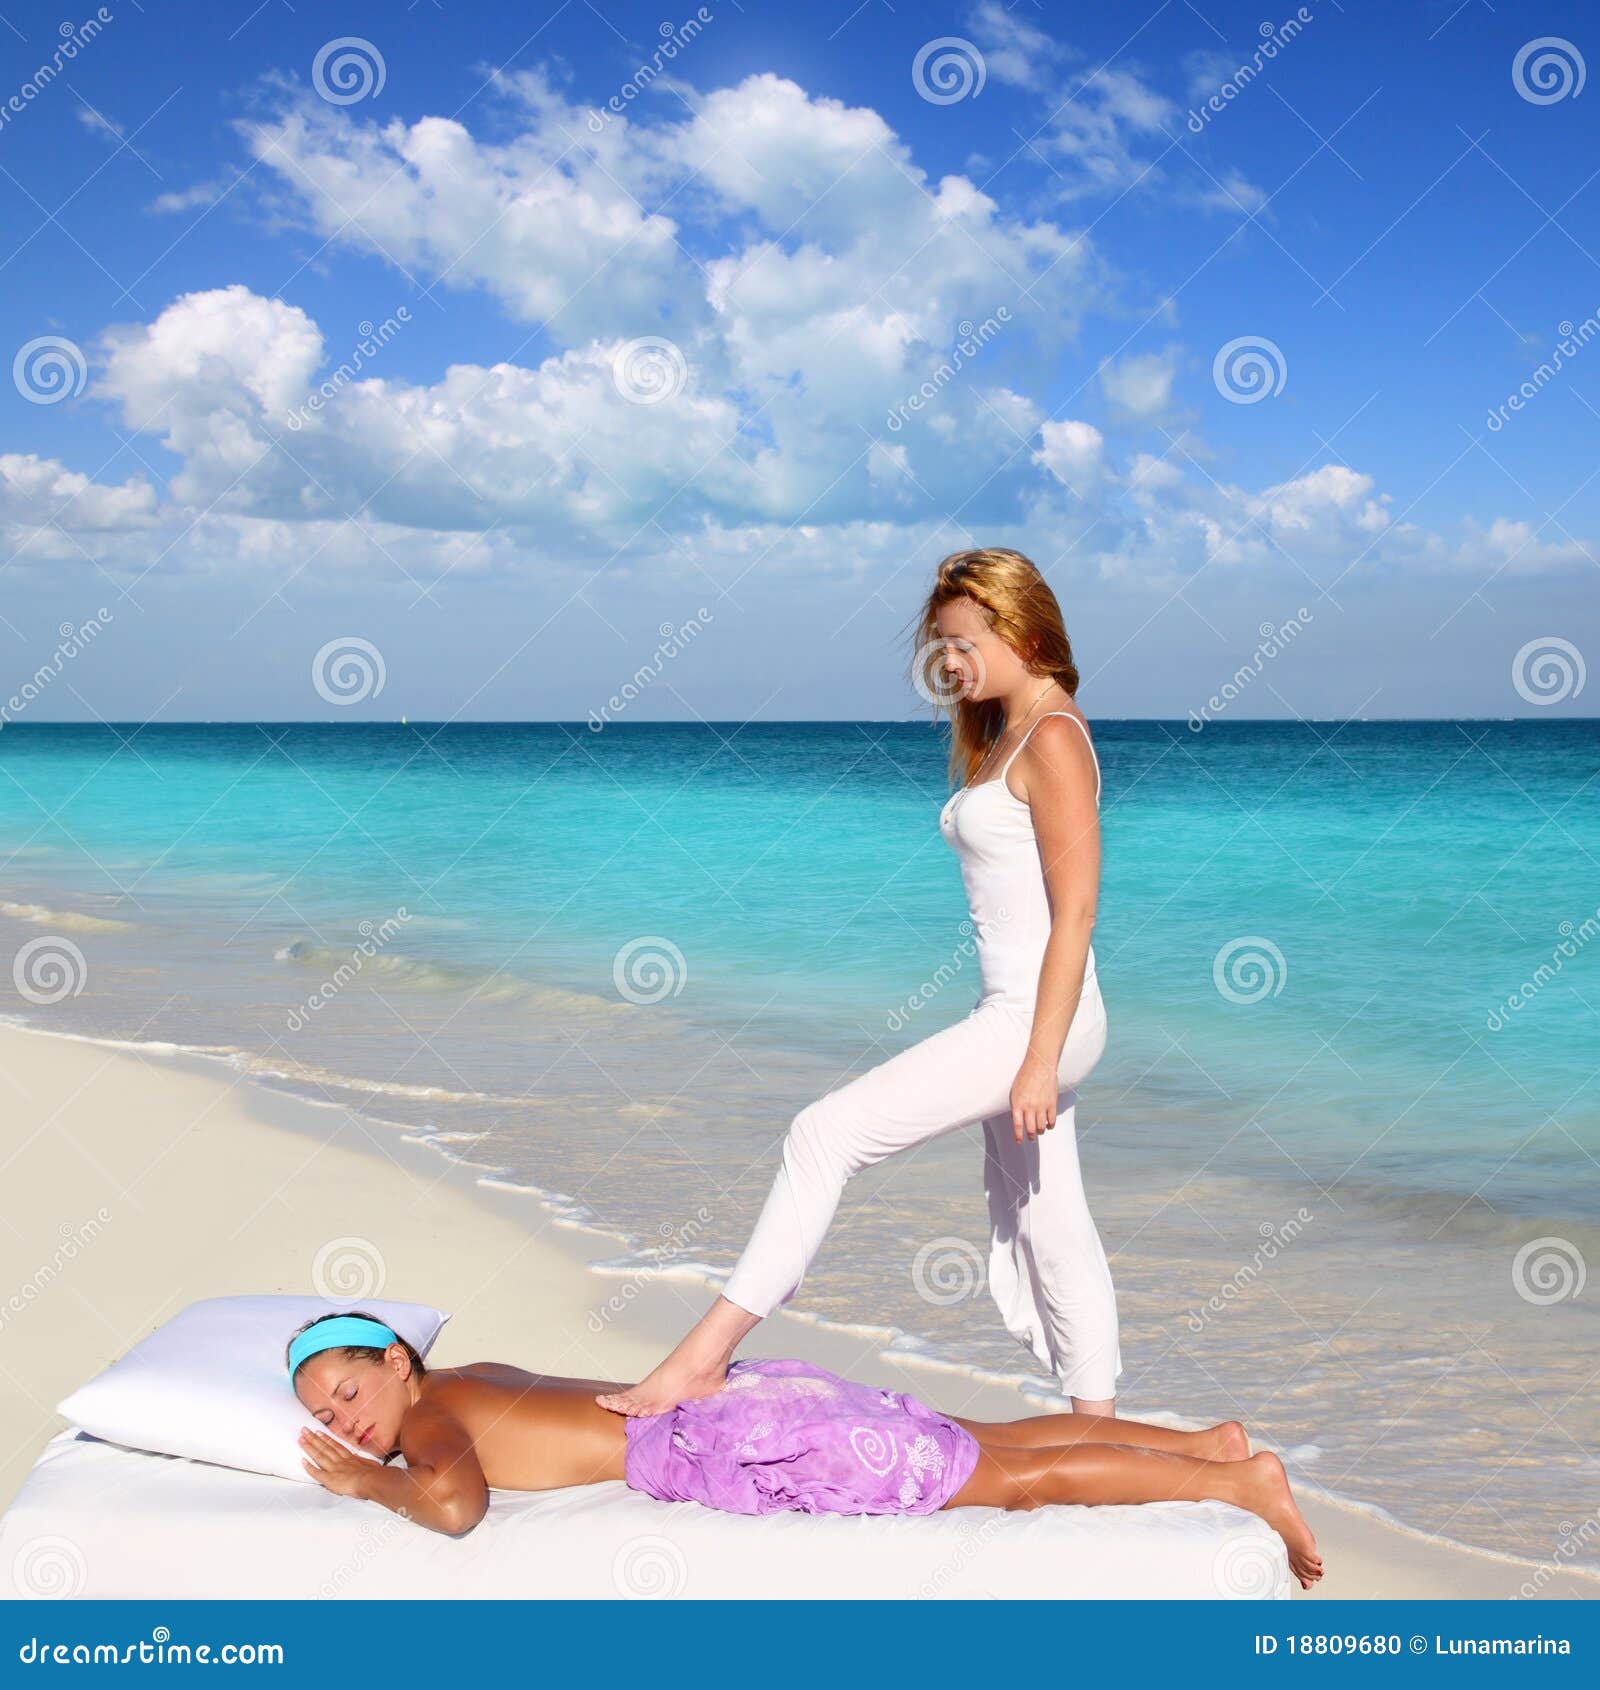 Naked Massage On The Beach